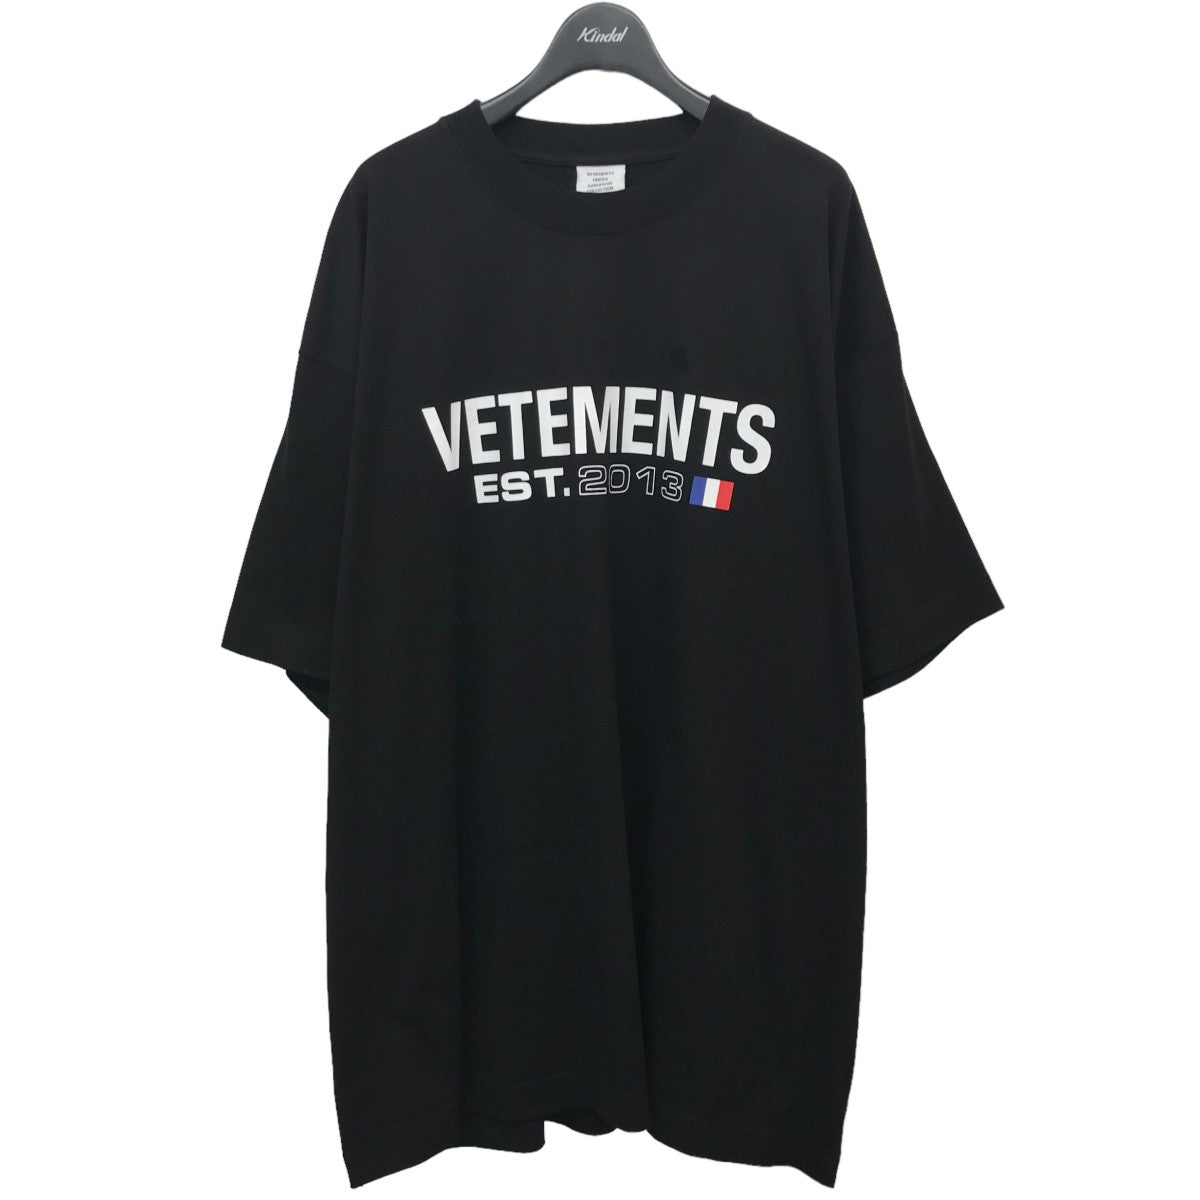 23aw 正規品 新品 VETEMENTS Tシャツ S定価82500円